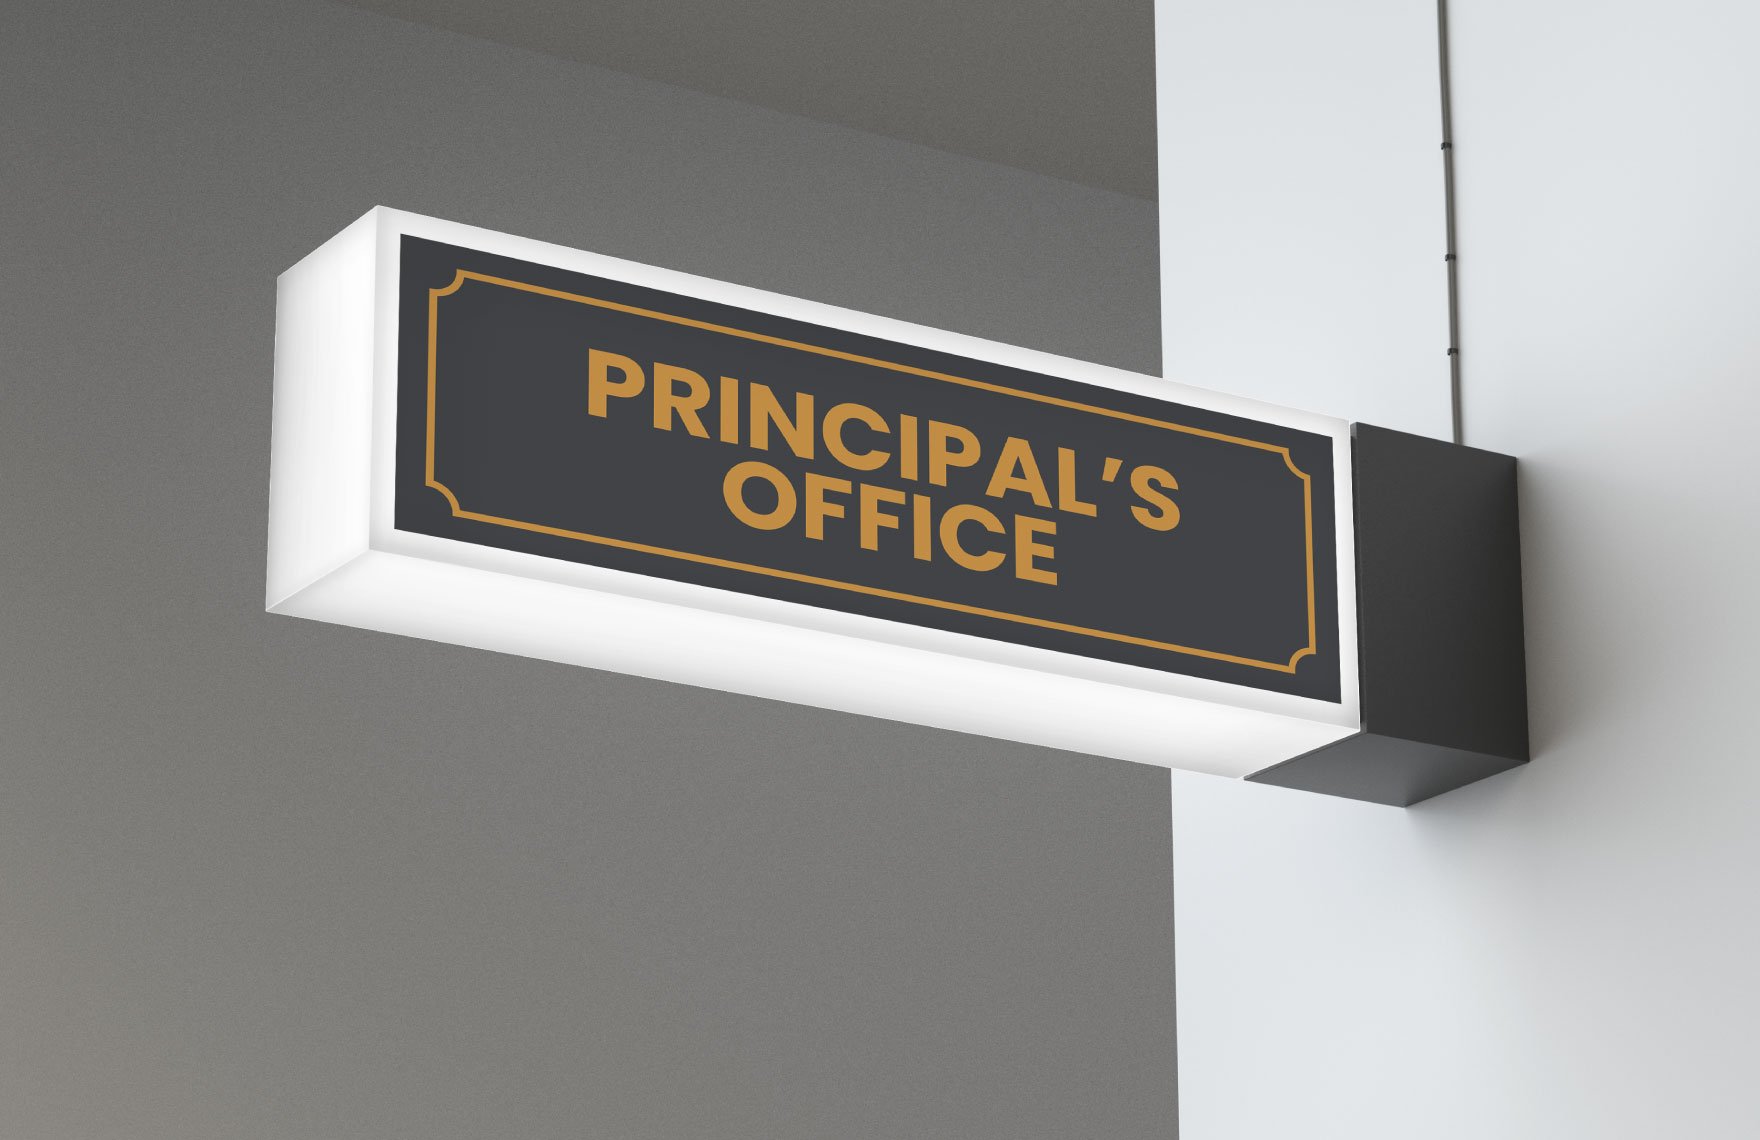 School Principal's Office Sign Template